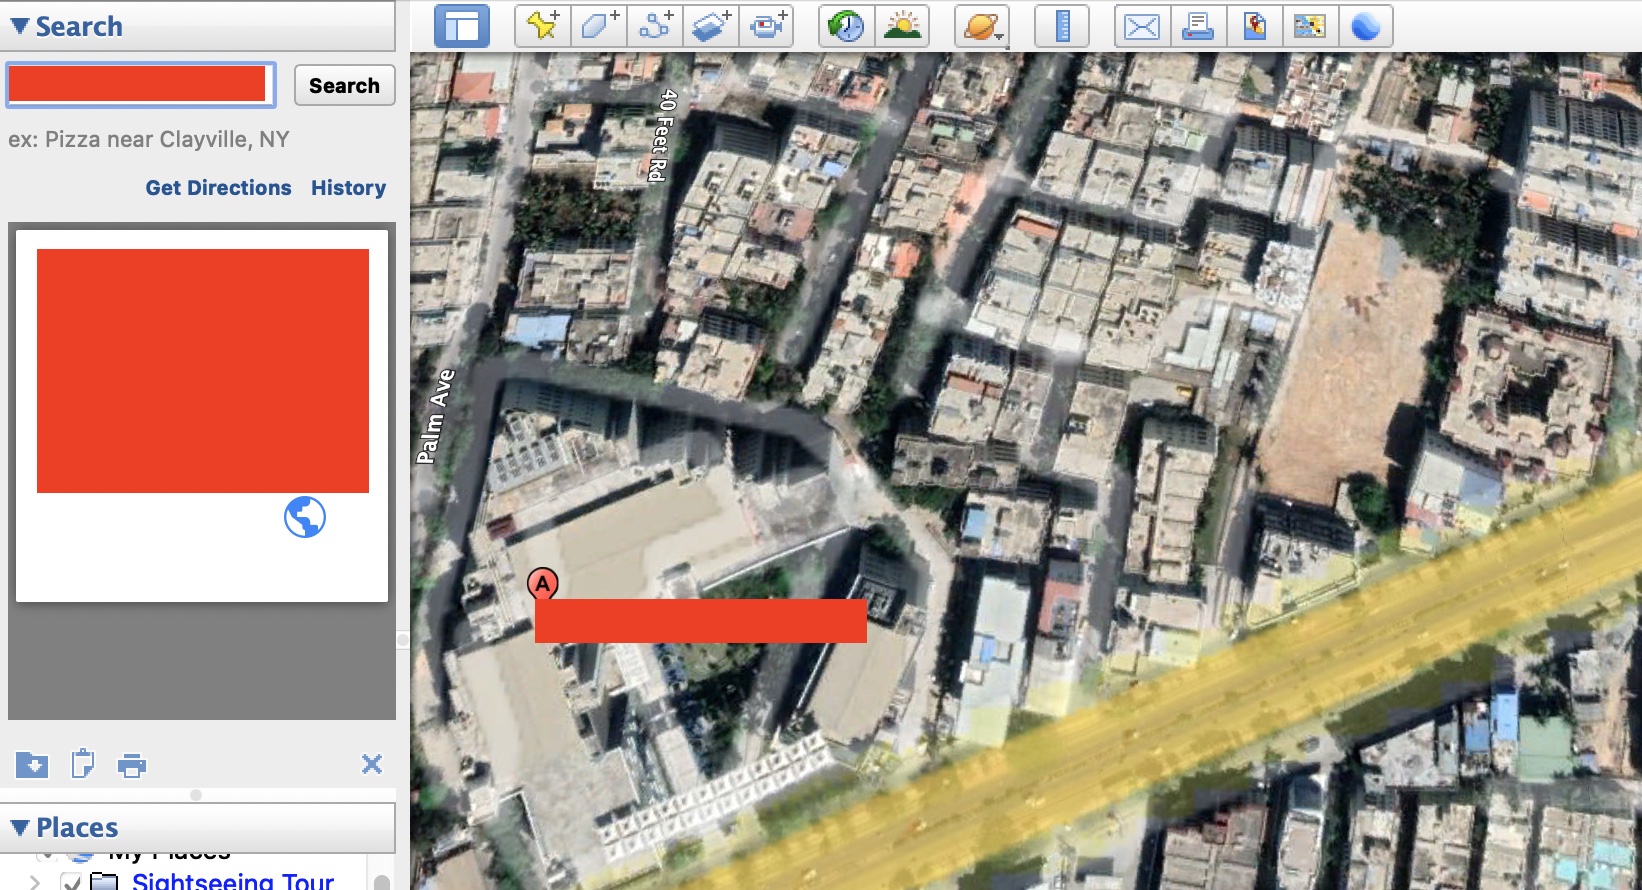 Cara mengubah nama dan deskripsi suatu tempat di Google Earth